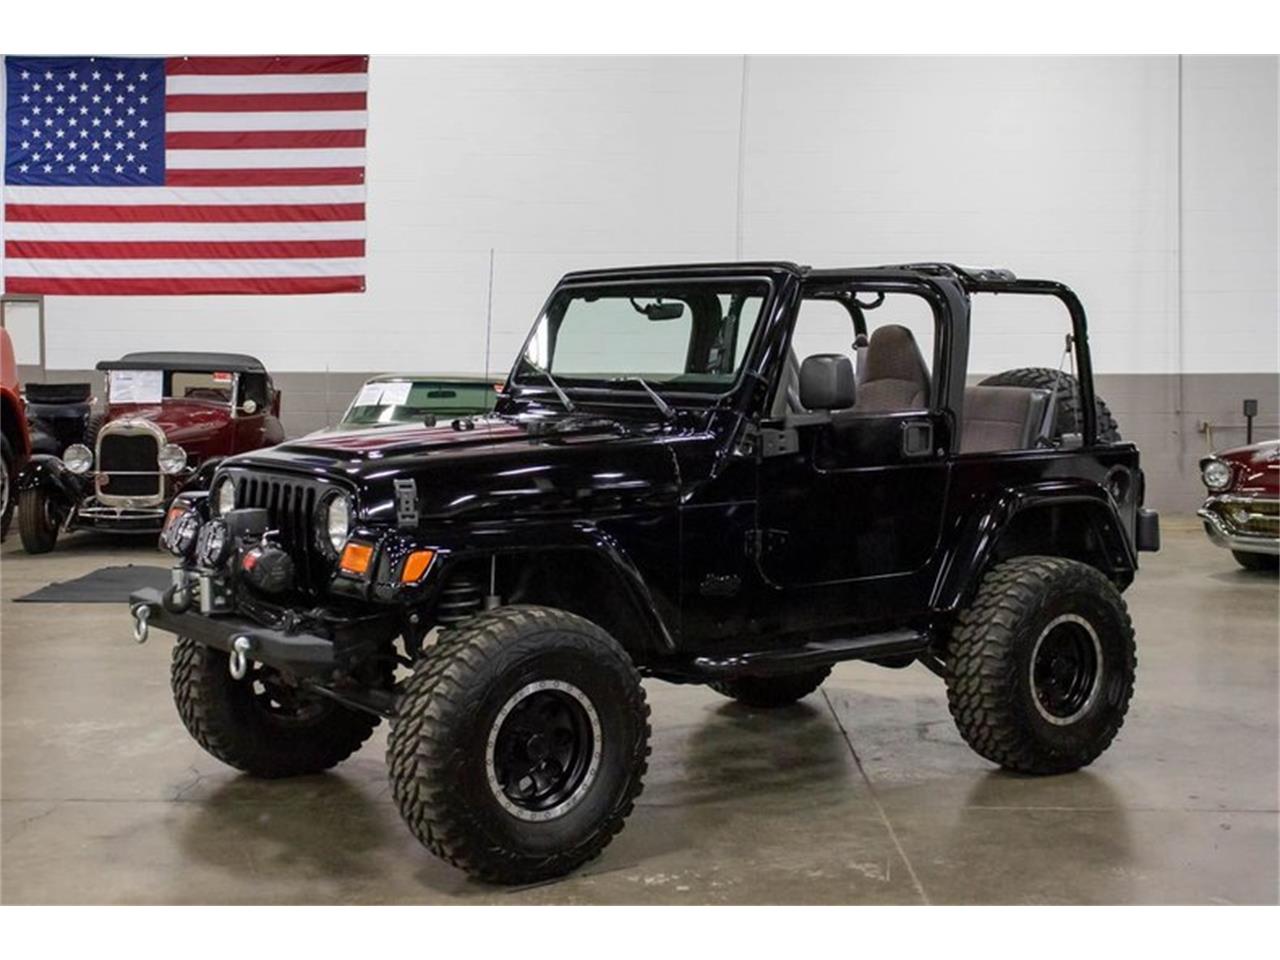 For Sale: 2000 Jeep Wrangler in Ken2od, Michigan for sale in Grand Rapids, MI